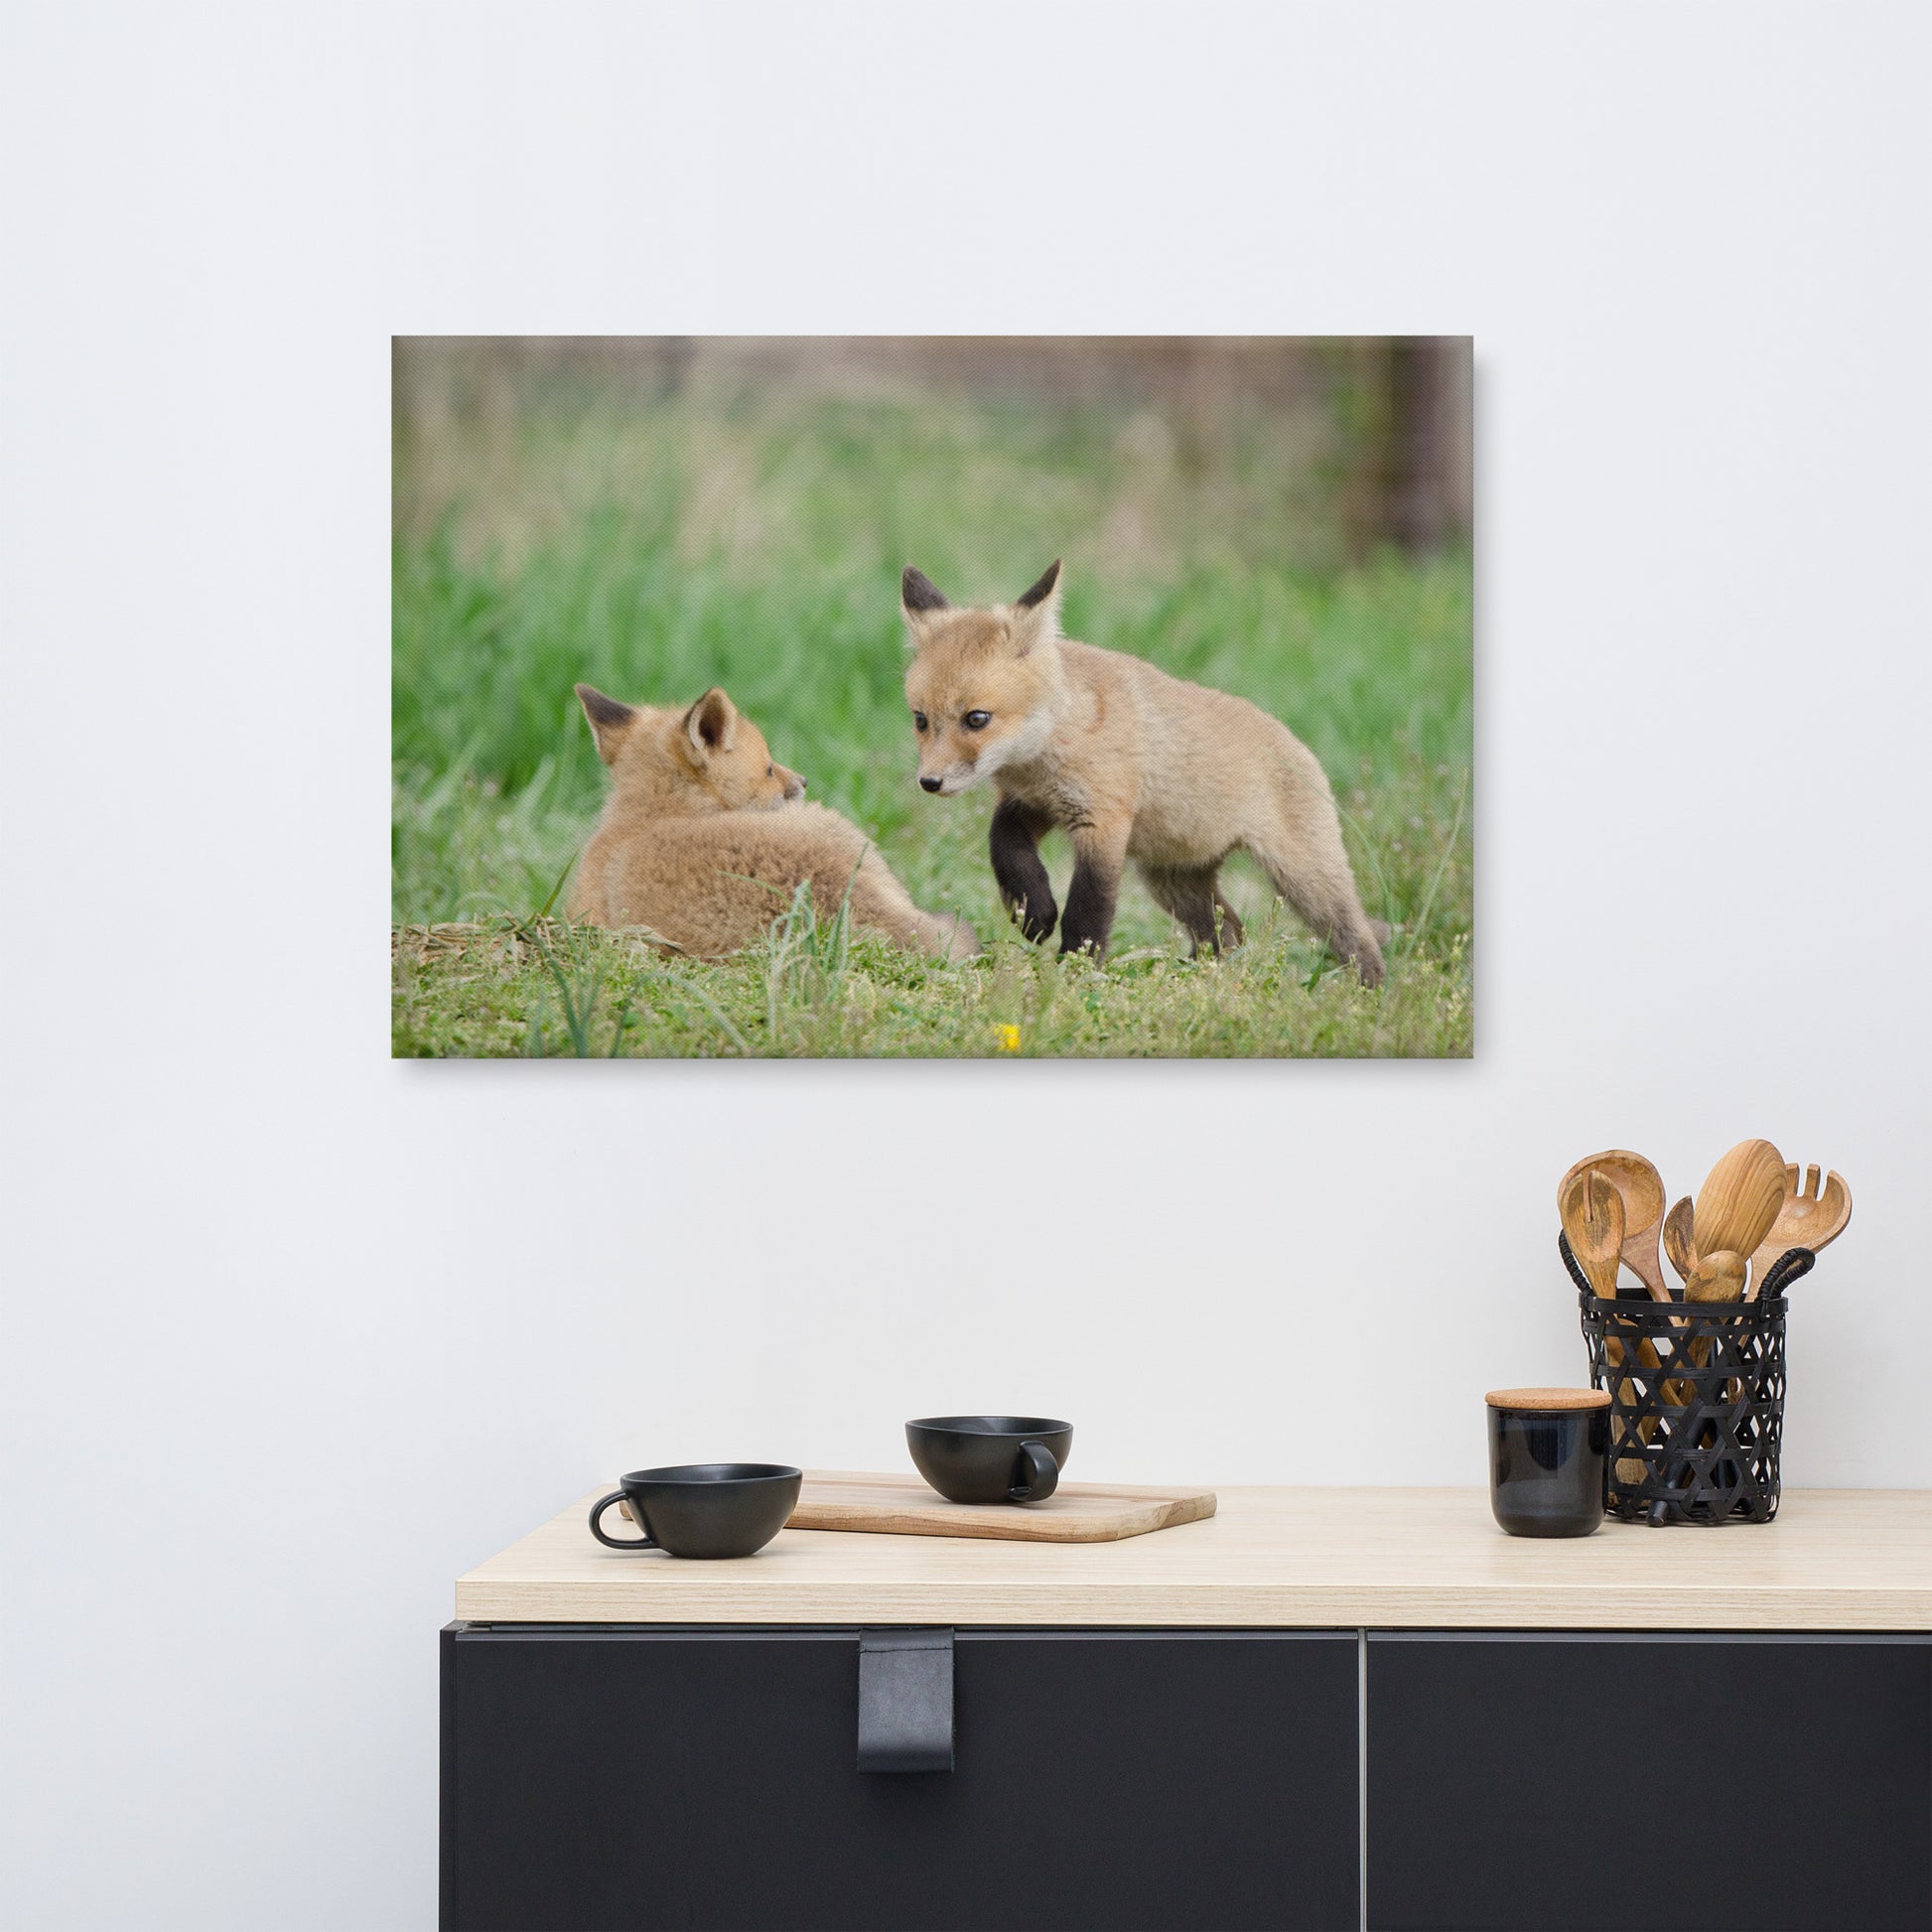 Large Canvas Bedroom: Fox Pups / Kits - Coming to Get You Animal / Wildlife Photograph Canvas Wall Art Print - Artwork - Wall Decor